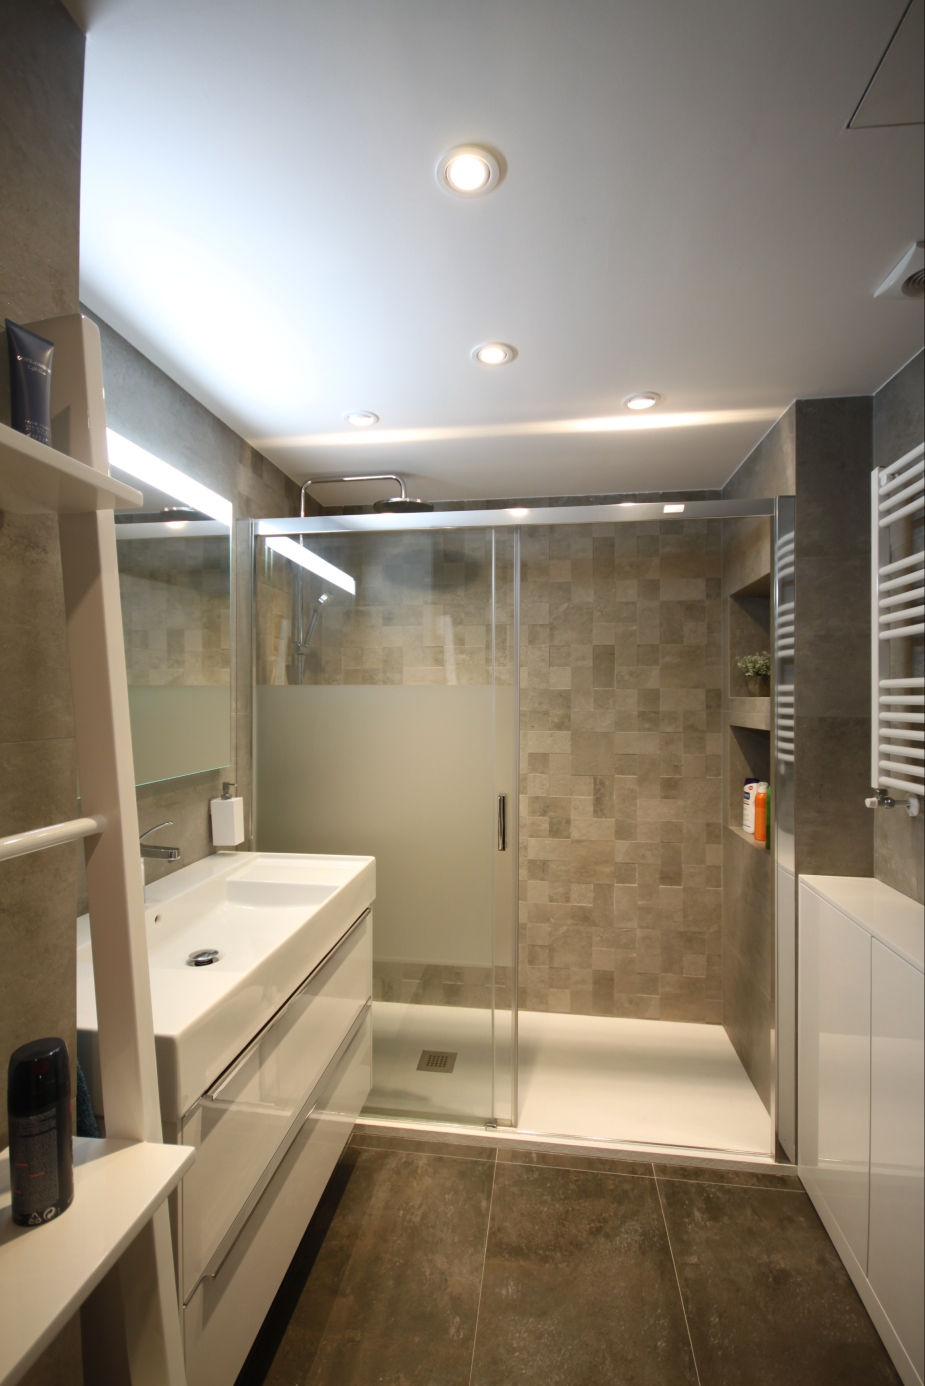 Gahecor baño reformado con azulejo de saloni